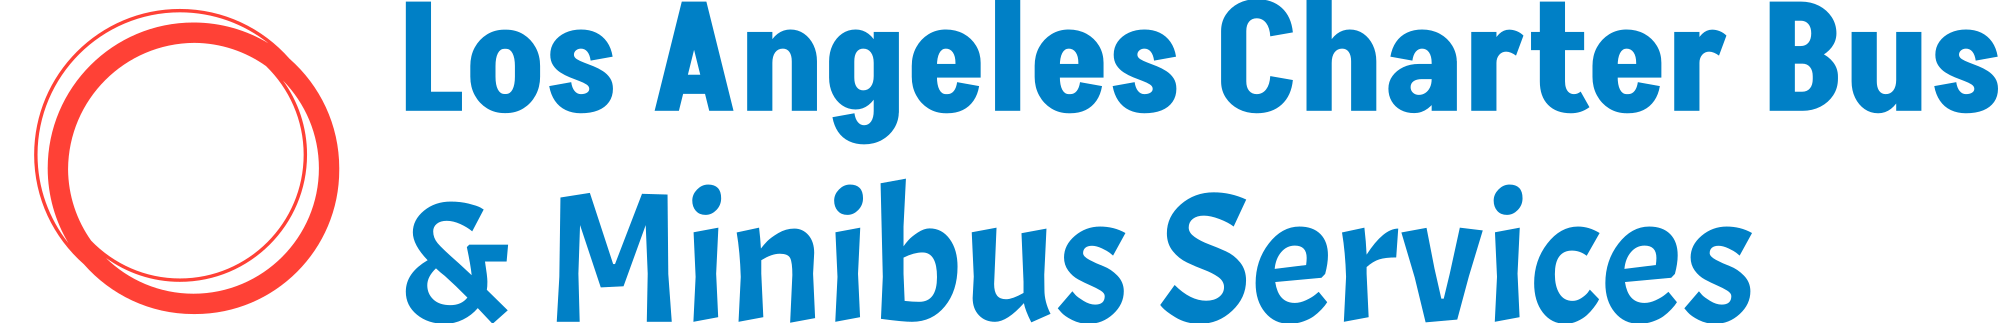 Charter Bus Company Los Angeles logo